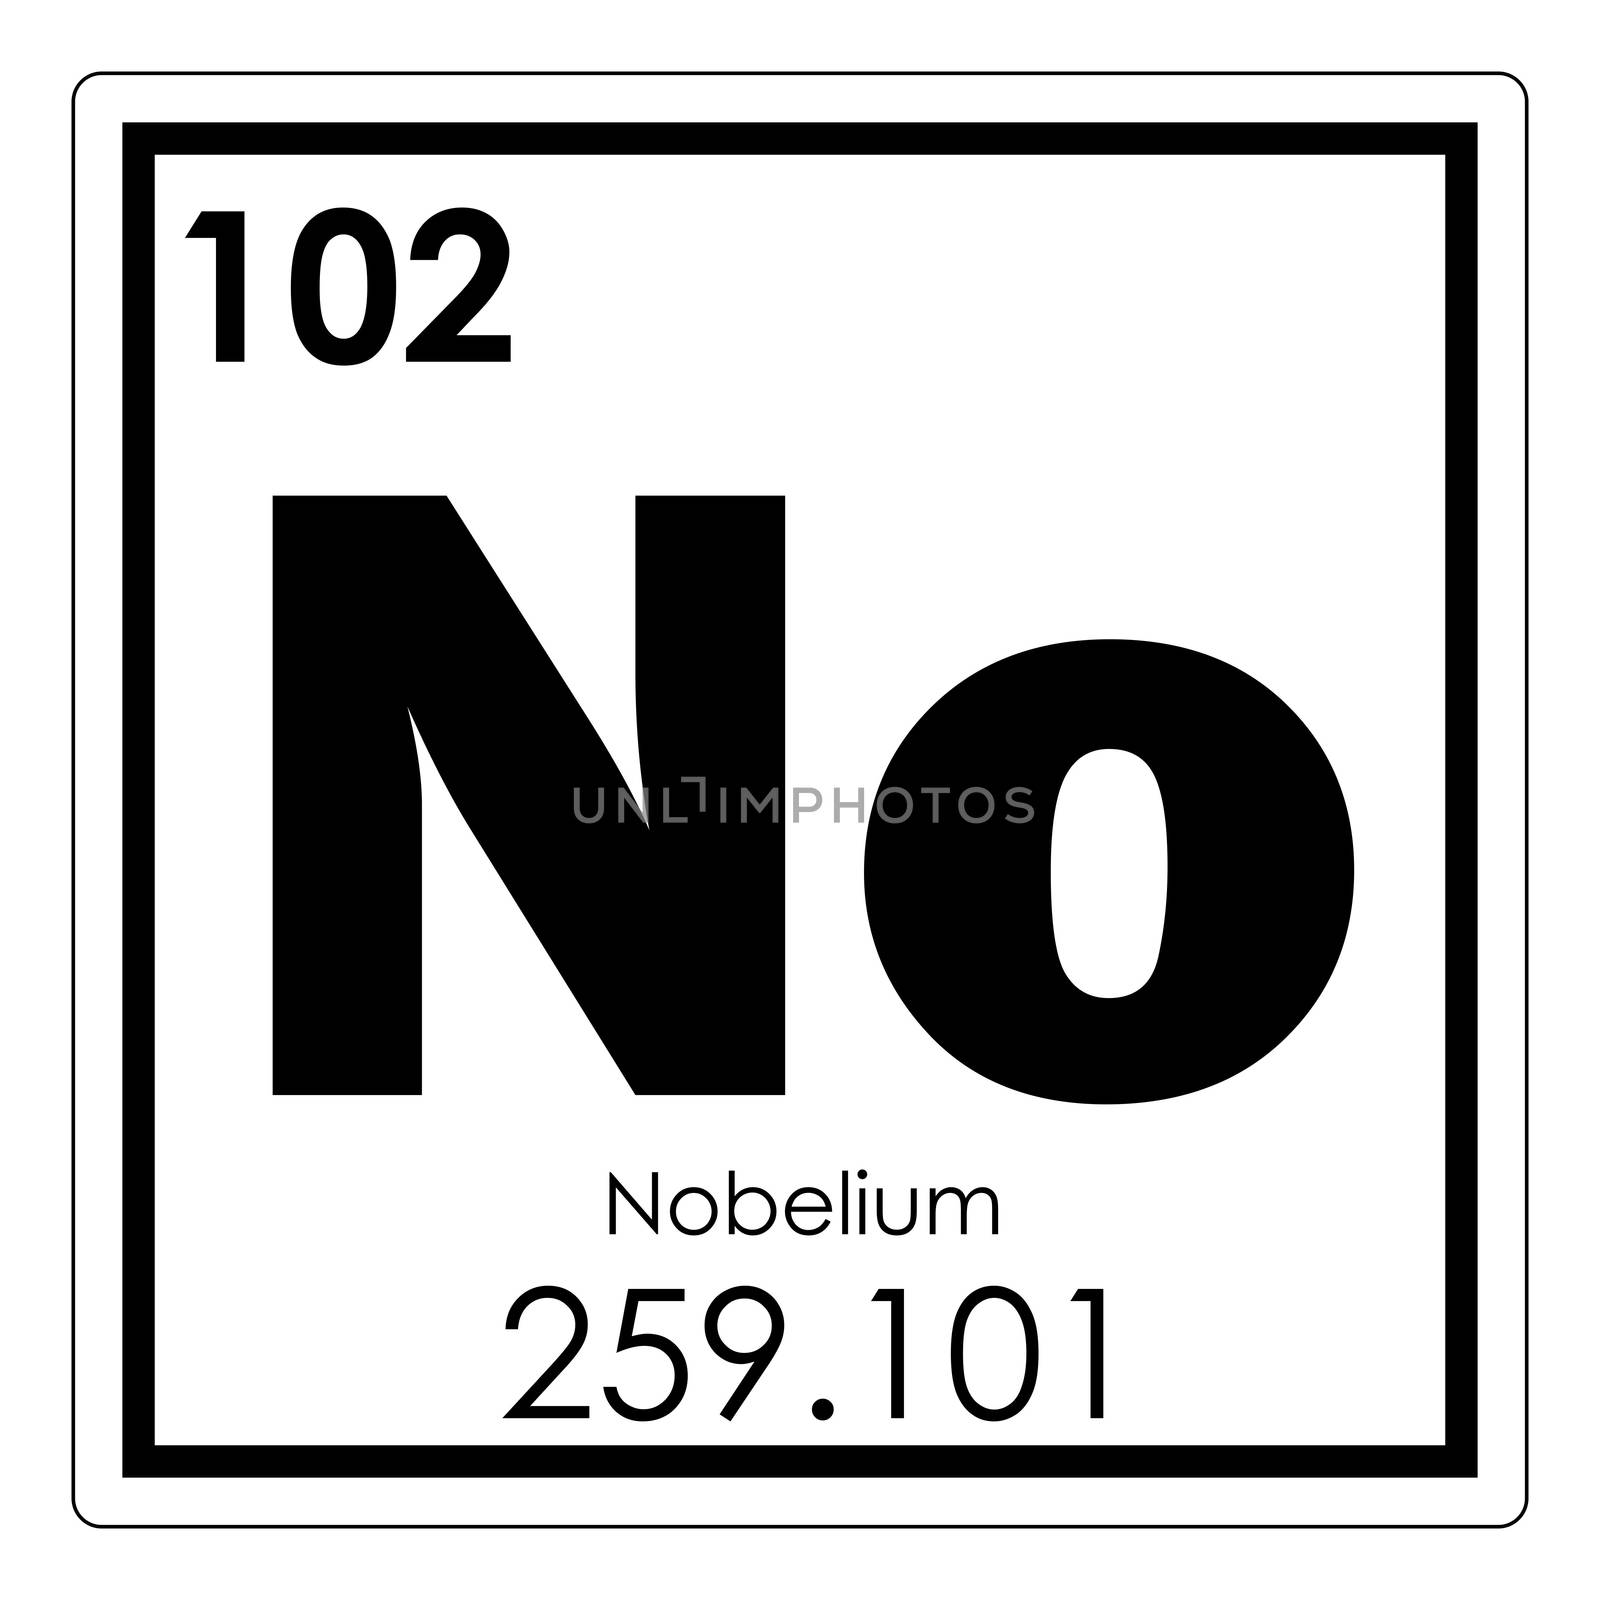 Nobelium chemical element by tony4urban